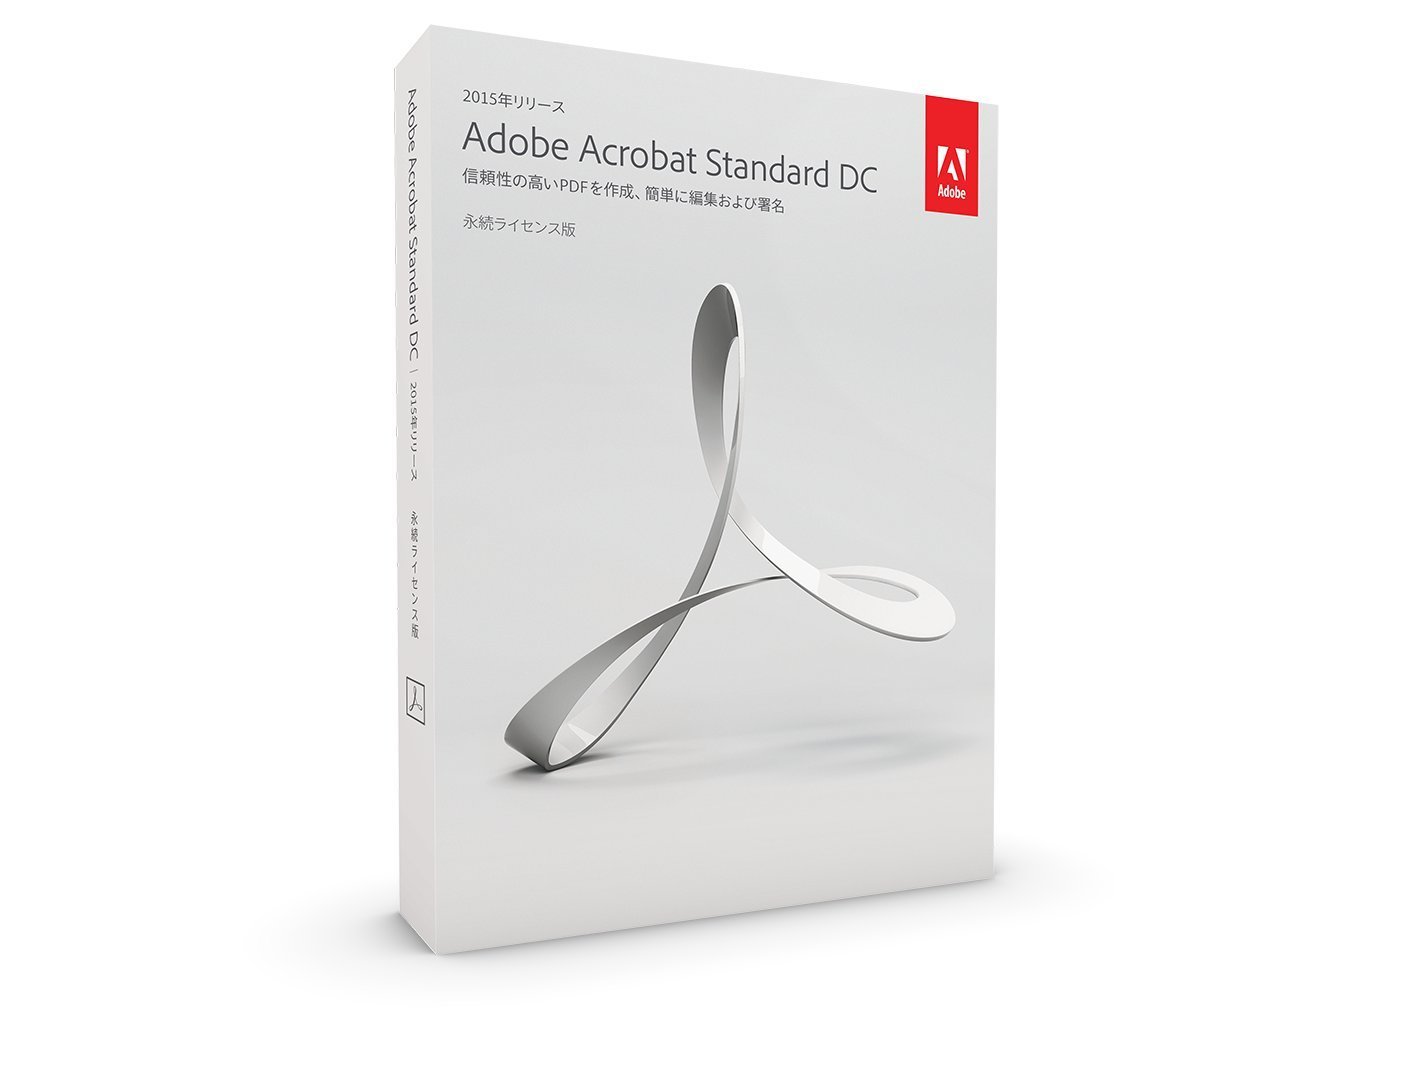 Adobe Photoshop CS6 Extended Windows版 (旧製品)